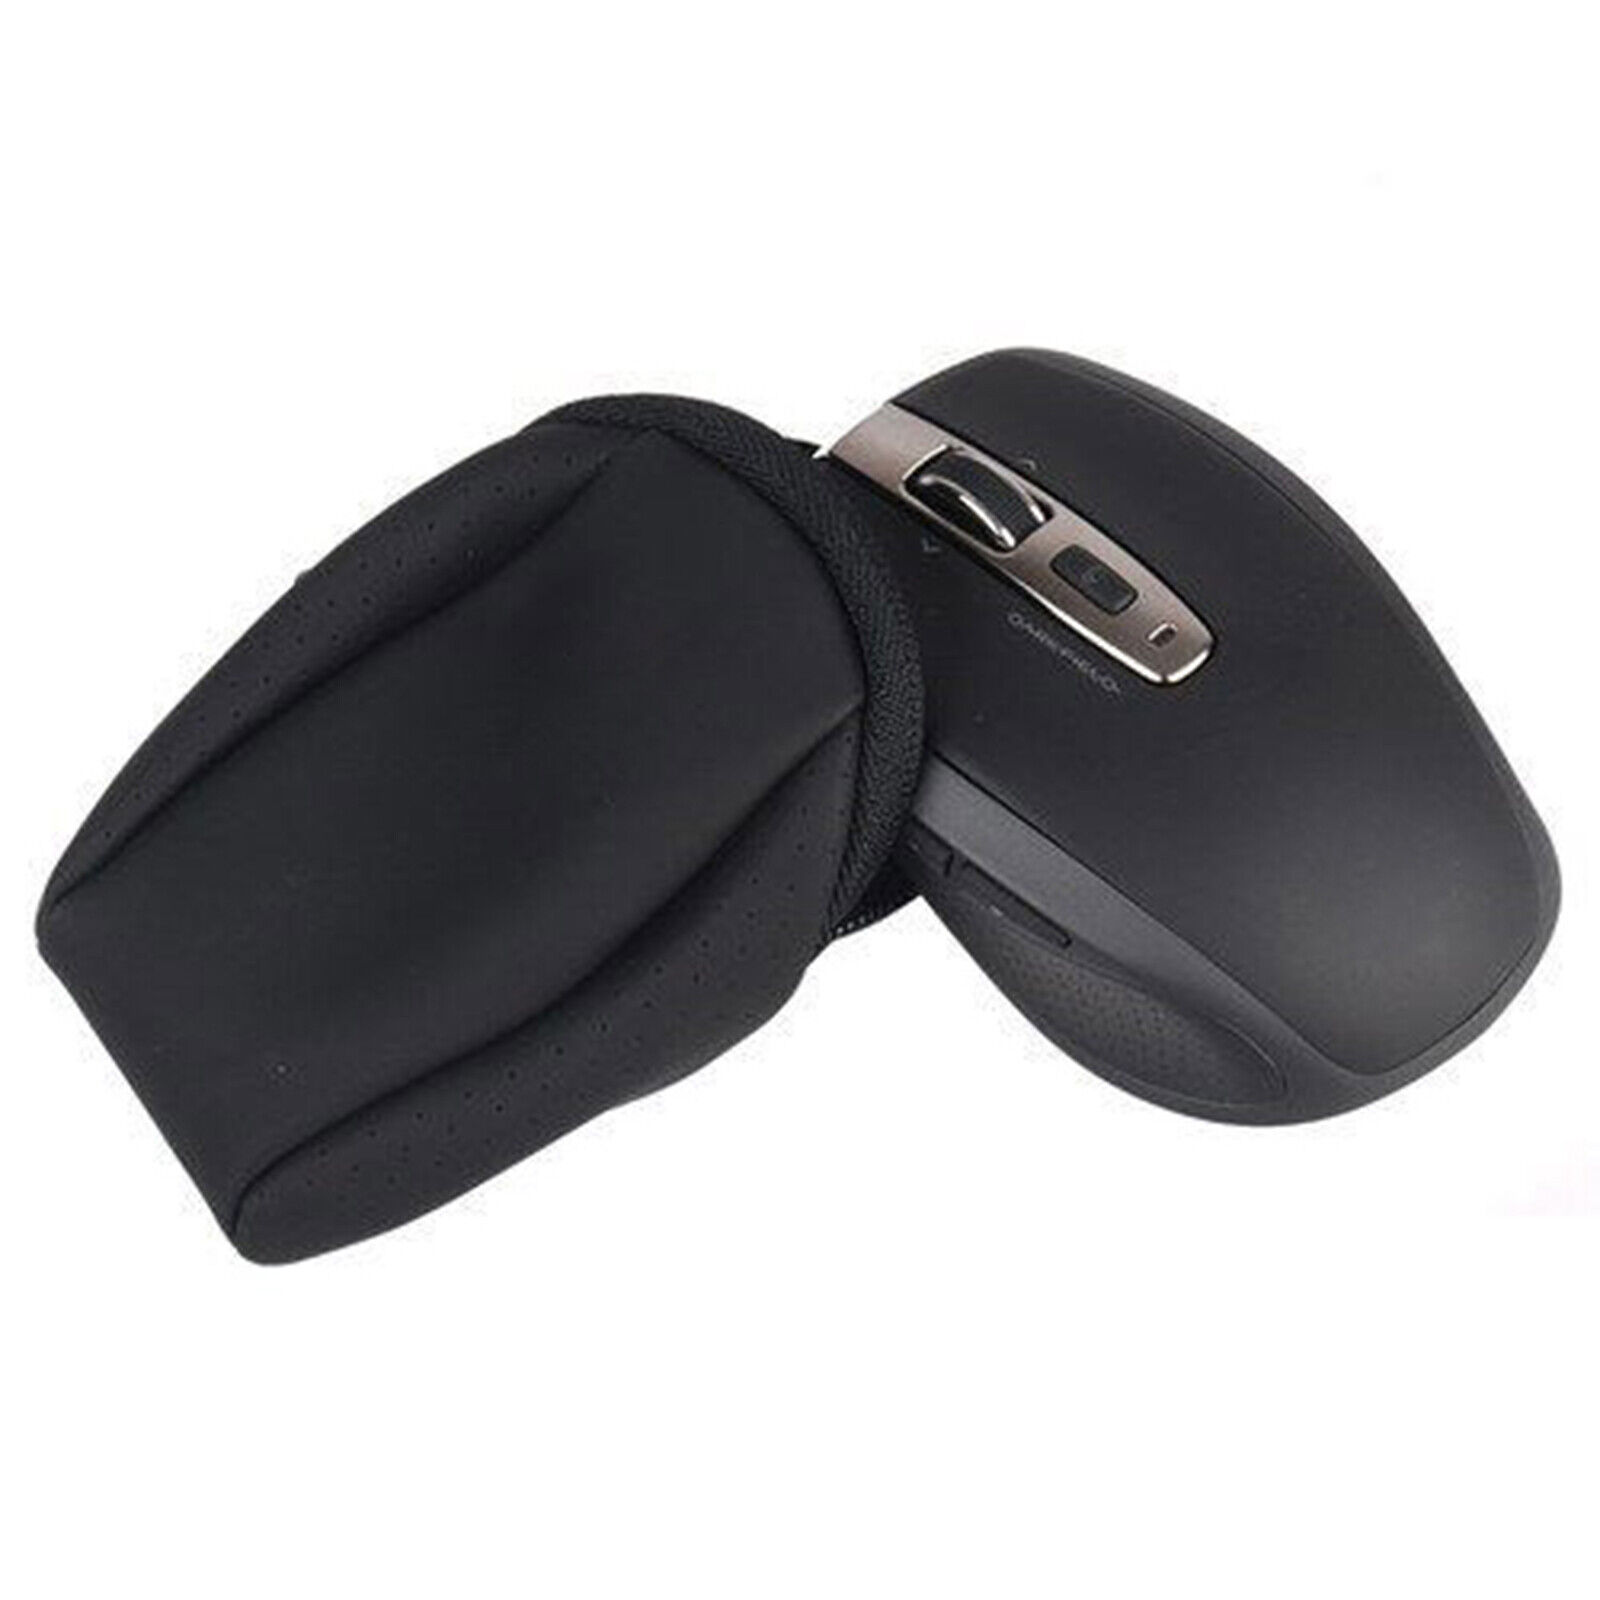 For Logitech M905 M325 M235 M305 M215 V470 V550 Portable Mouse Storage Bag Case